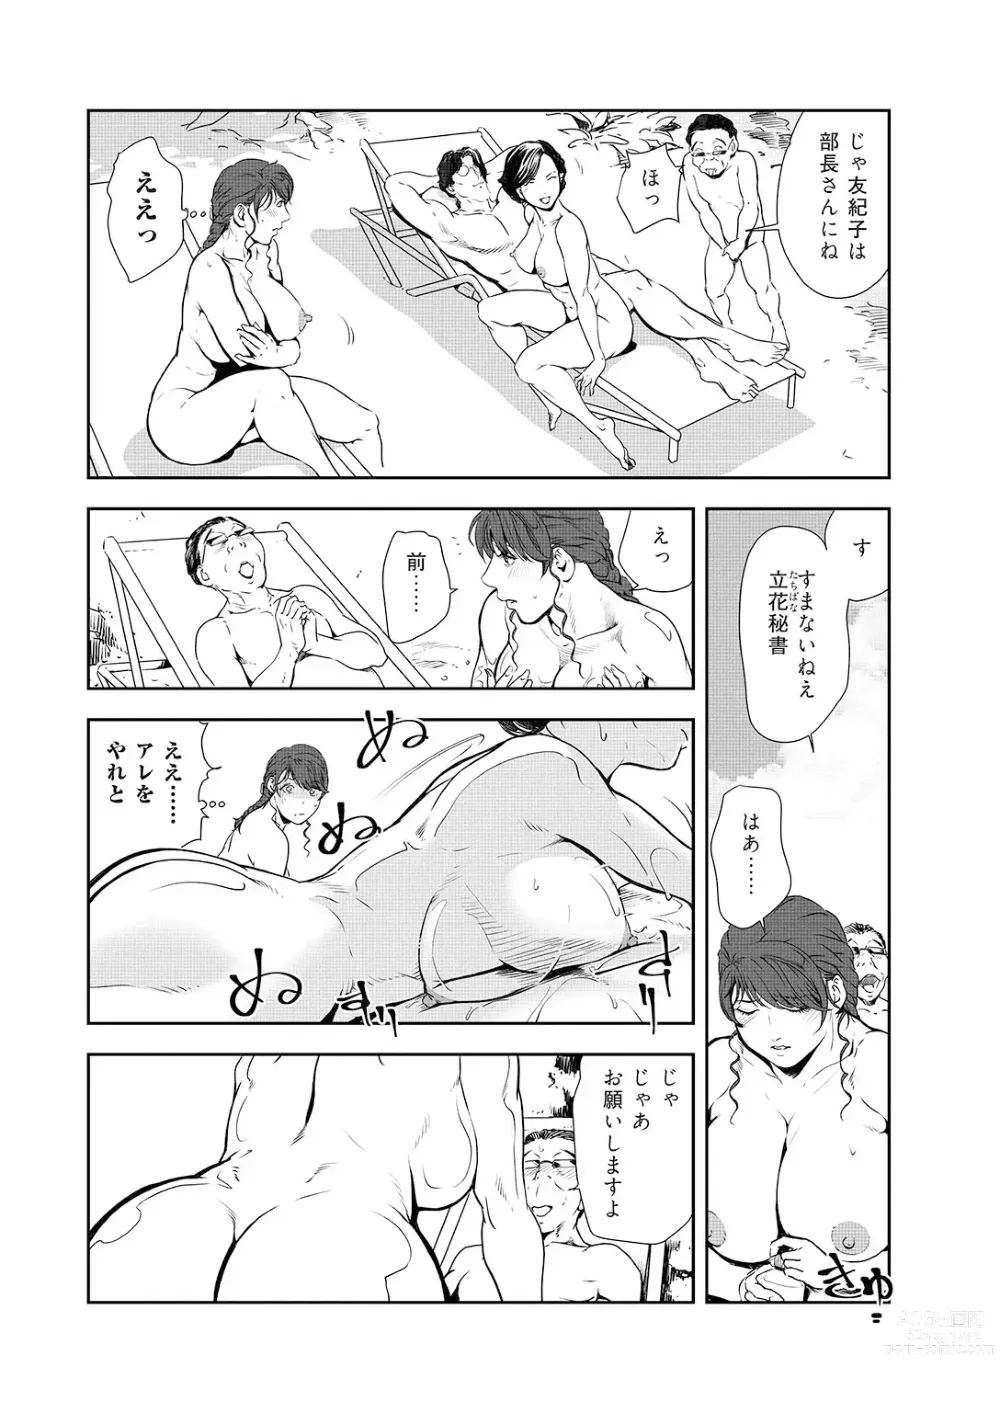 Page 11 of manga Nikuhisyo Yukiko 44